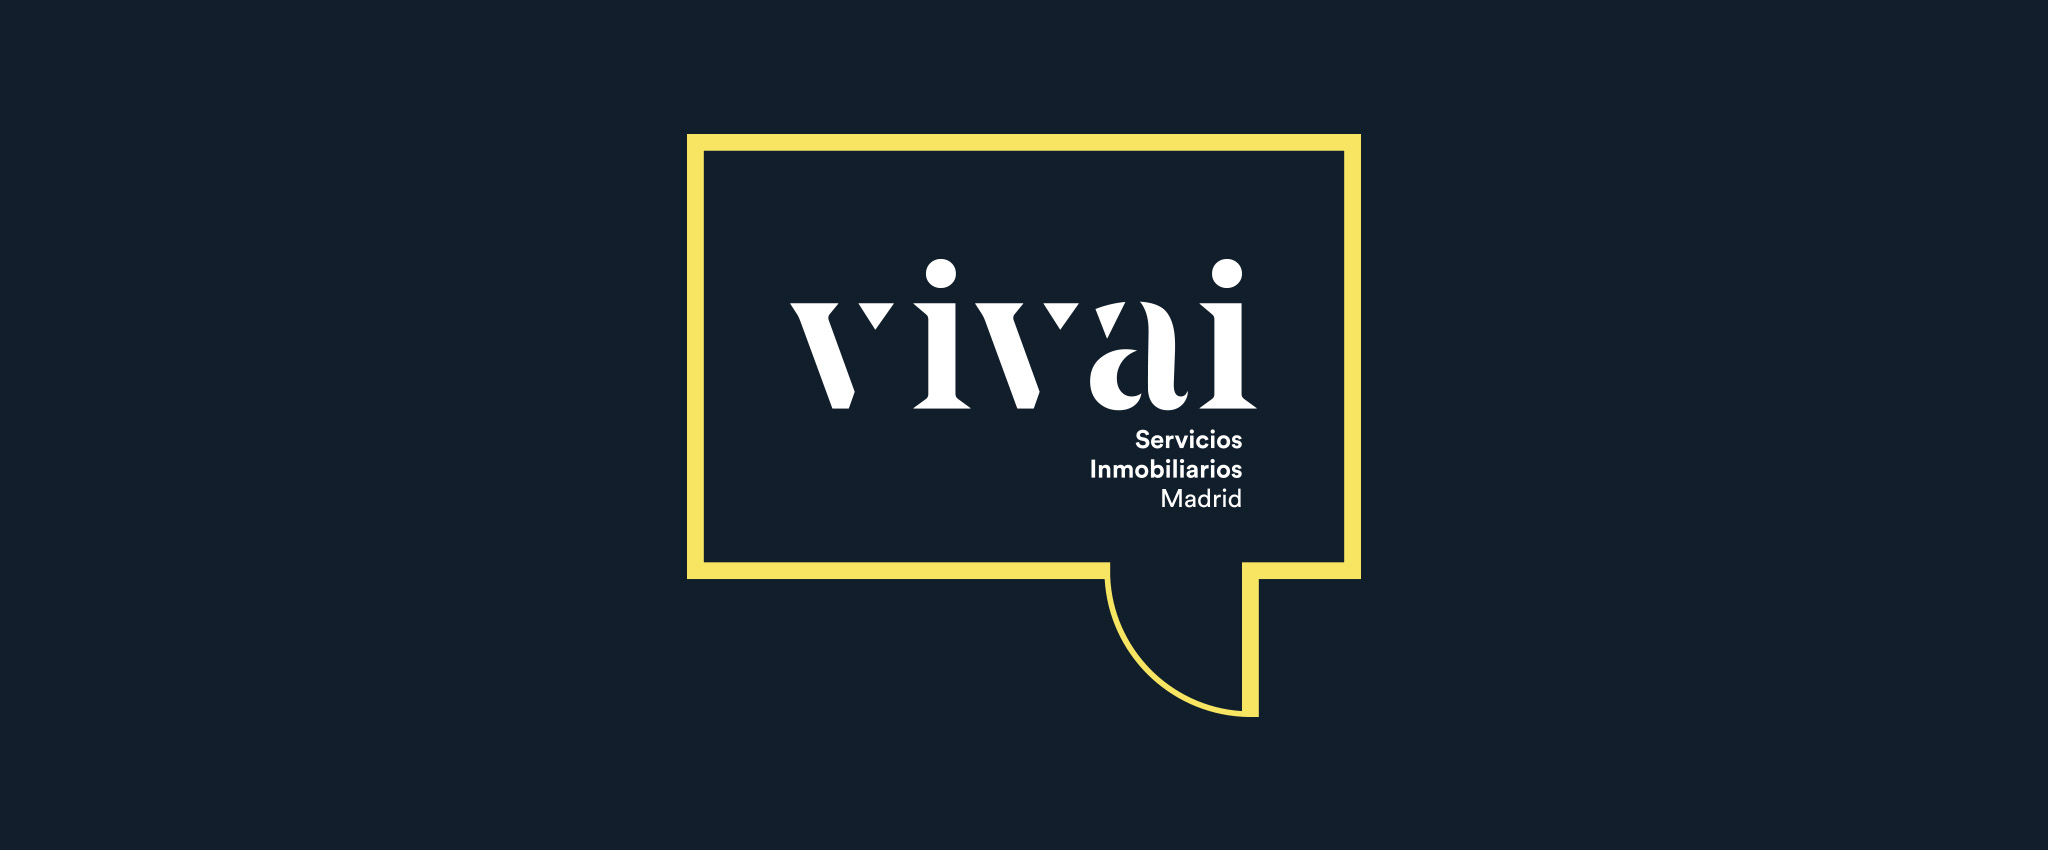 Vivai: Diseño de Identidad corporativa, branding